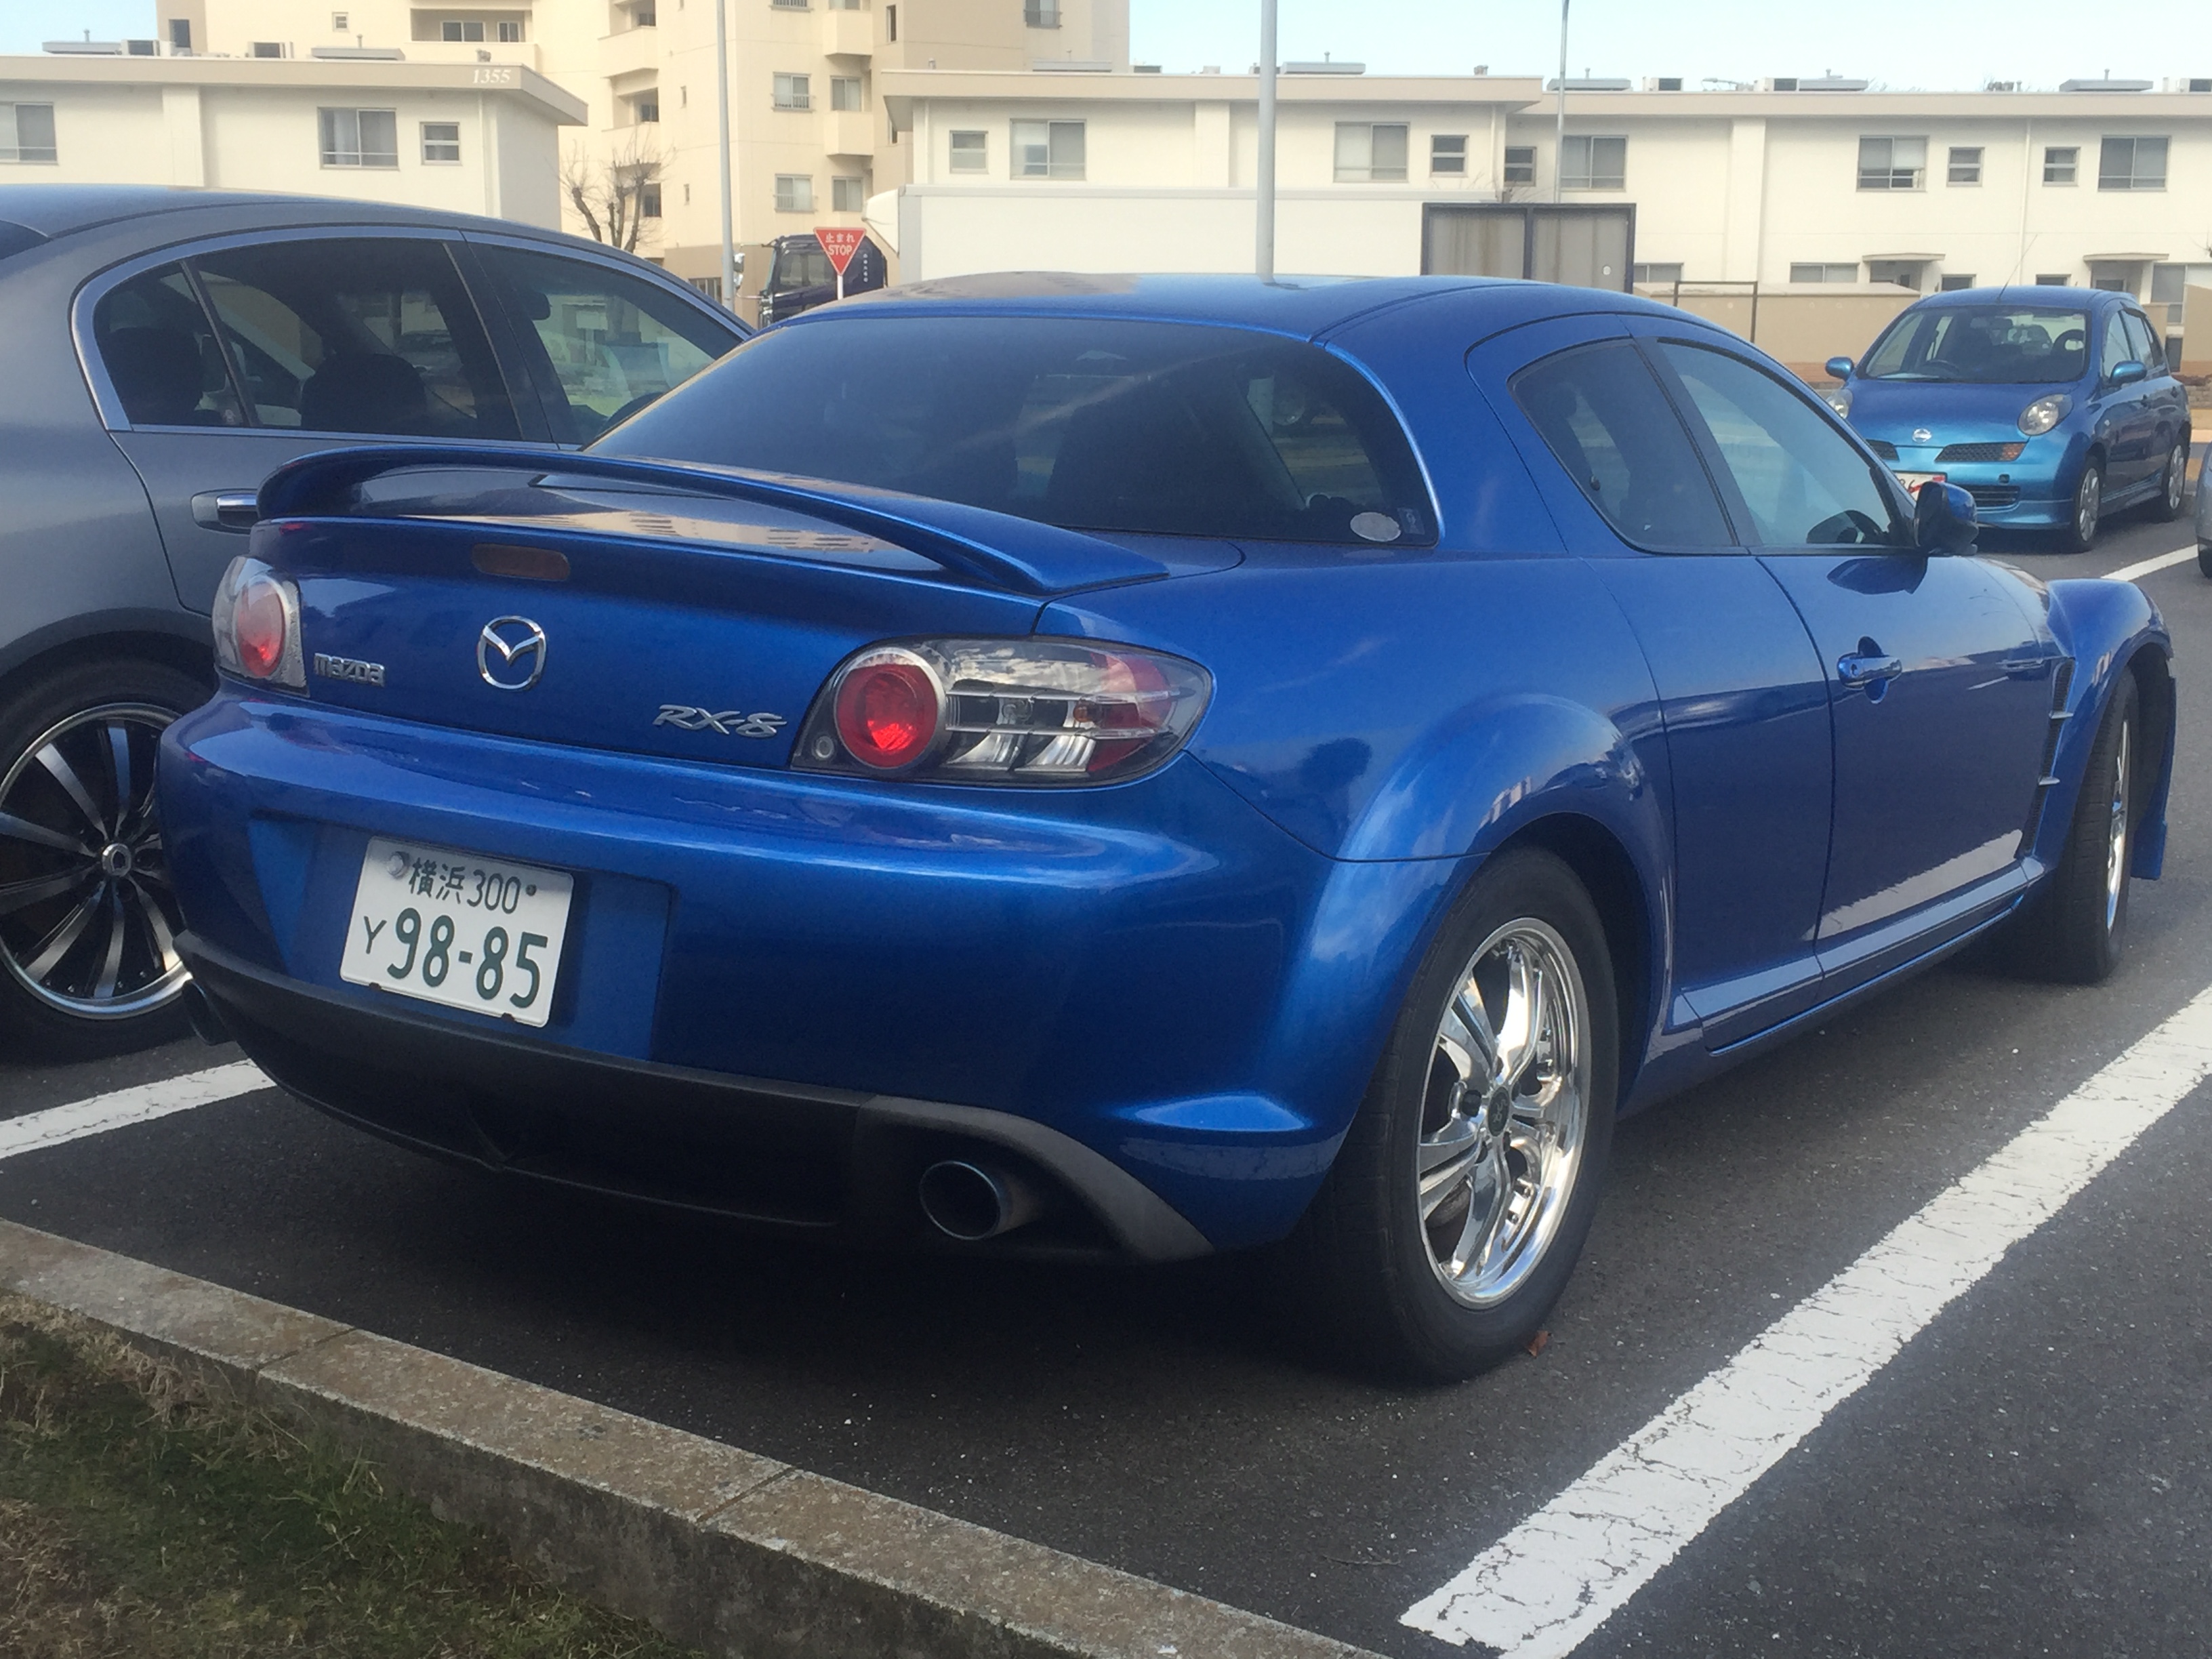 Mazda RX-8 rear at United States Fleet Activities Yokosuka Lemon Lot, © 2016 Thomas Kreutzer/The Truth About Cars